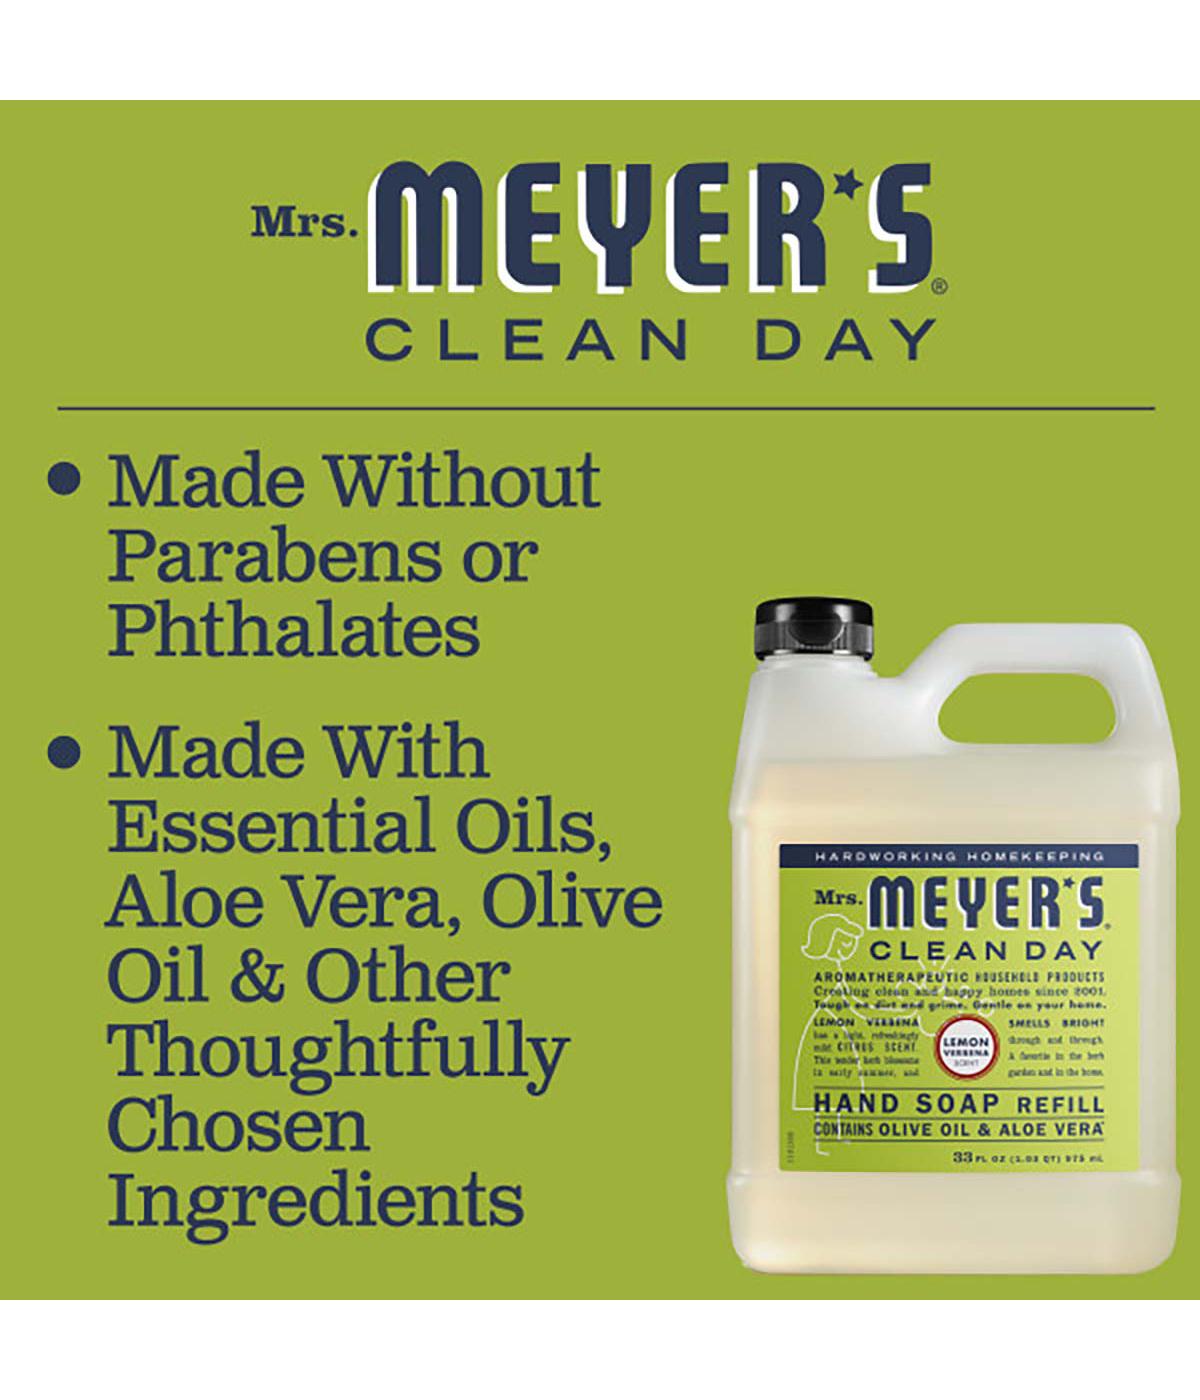 Mrs. Meyer's Clean Day Lemon Verbena Hand Soap Refill; image 2 of 5